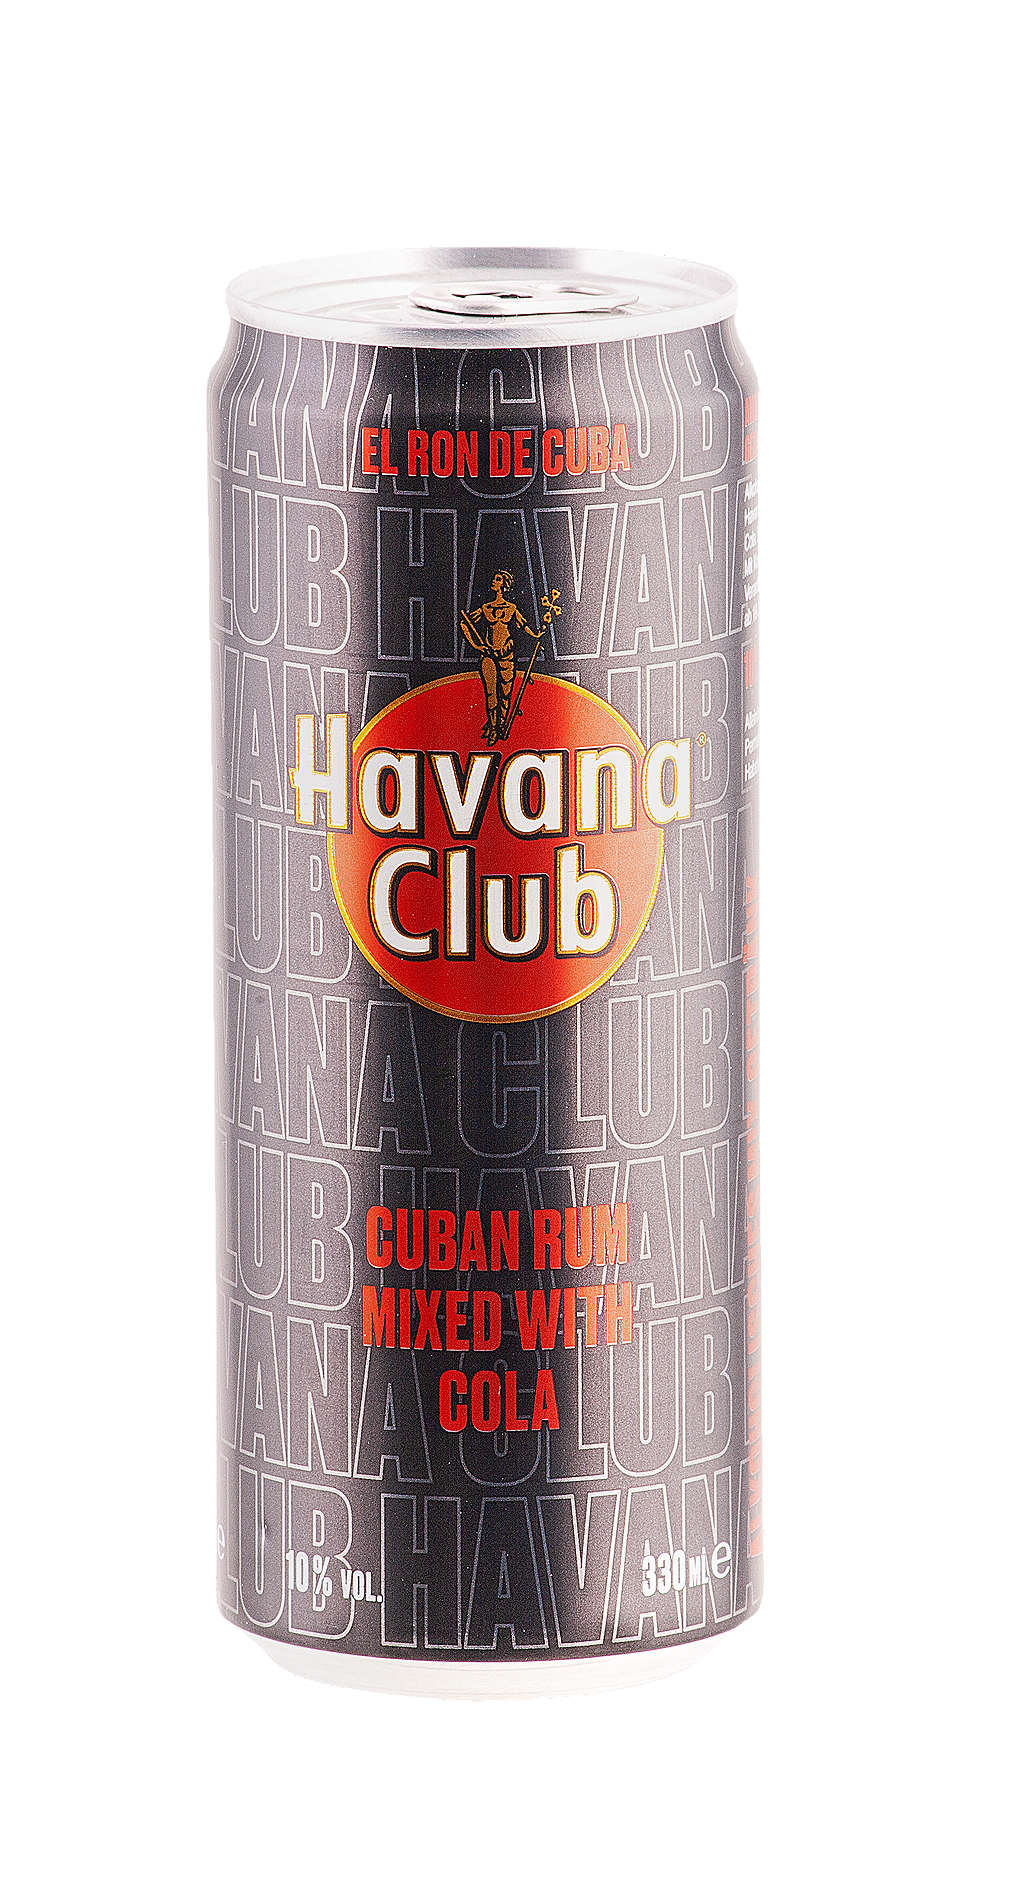 Fotografija ponude Havana Club Rum cola mix